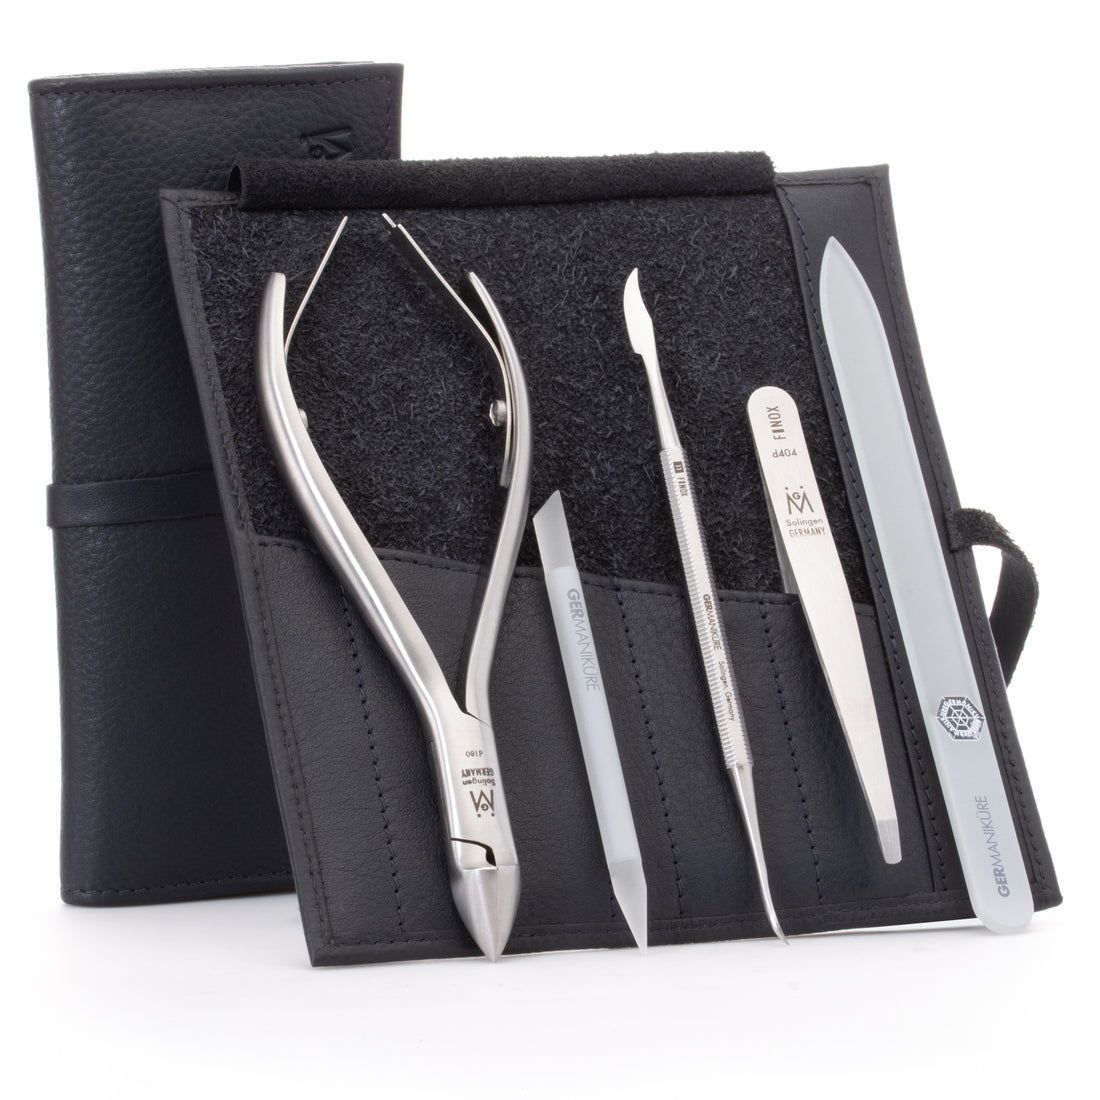 5 Piece Diabetic Manicure Set: Diabetic Safe Nail Nipper, Tweezers, Callous File, Glass Nail File, and Cuticle Stick